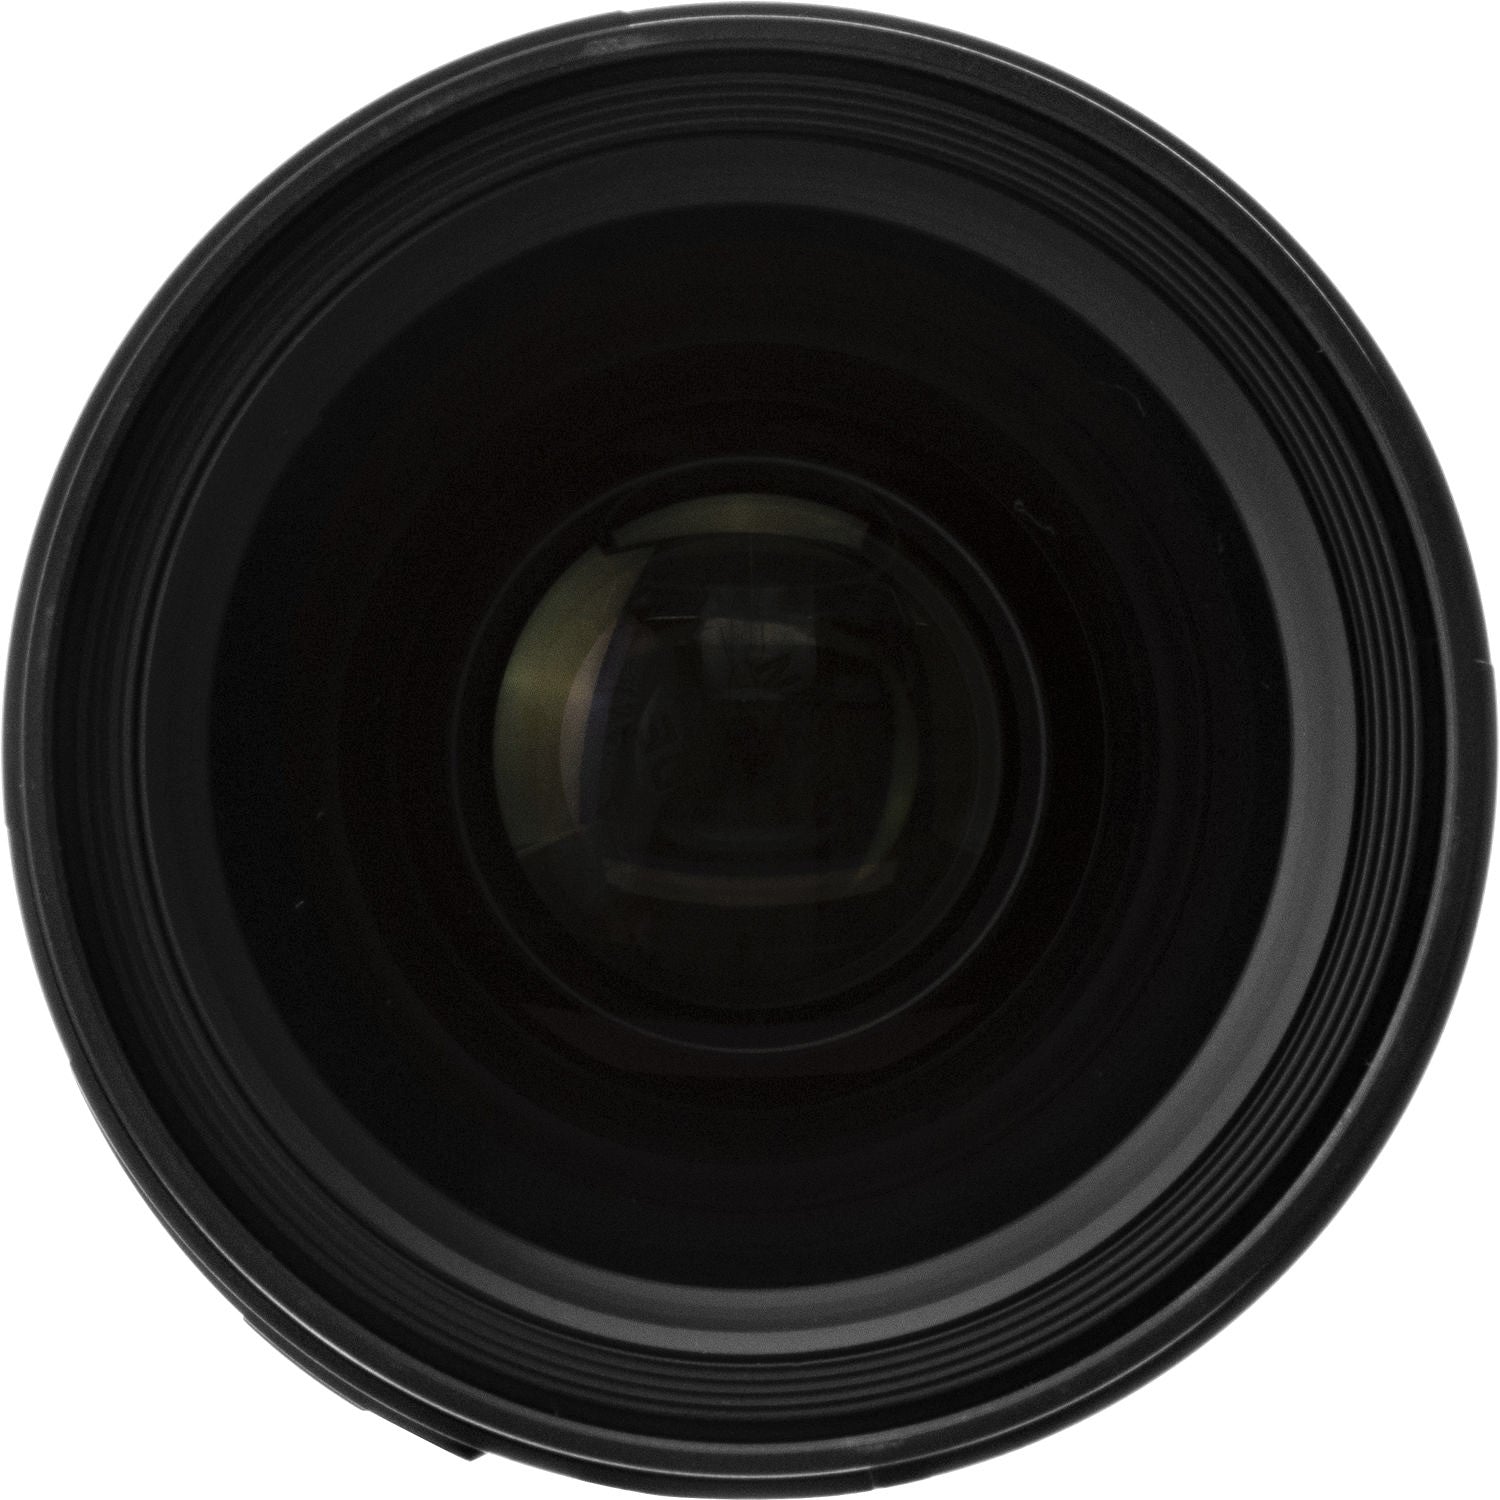 Sigma 40mm F1.4 DG HSM Art Lens for Canon EF